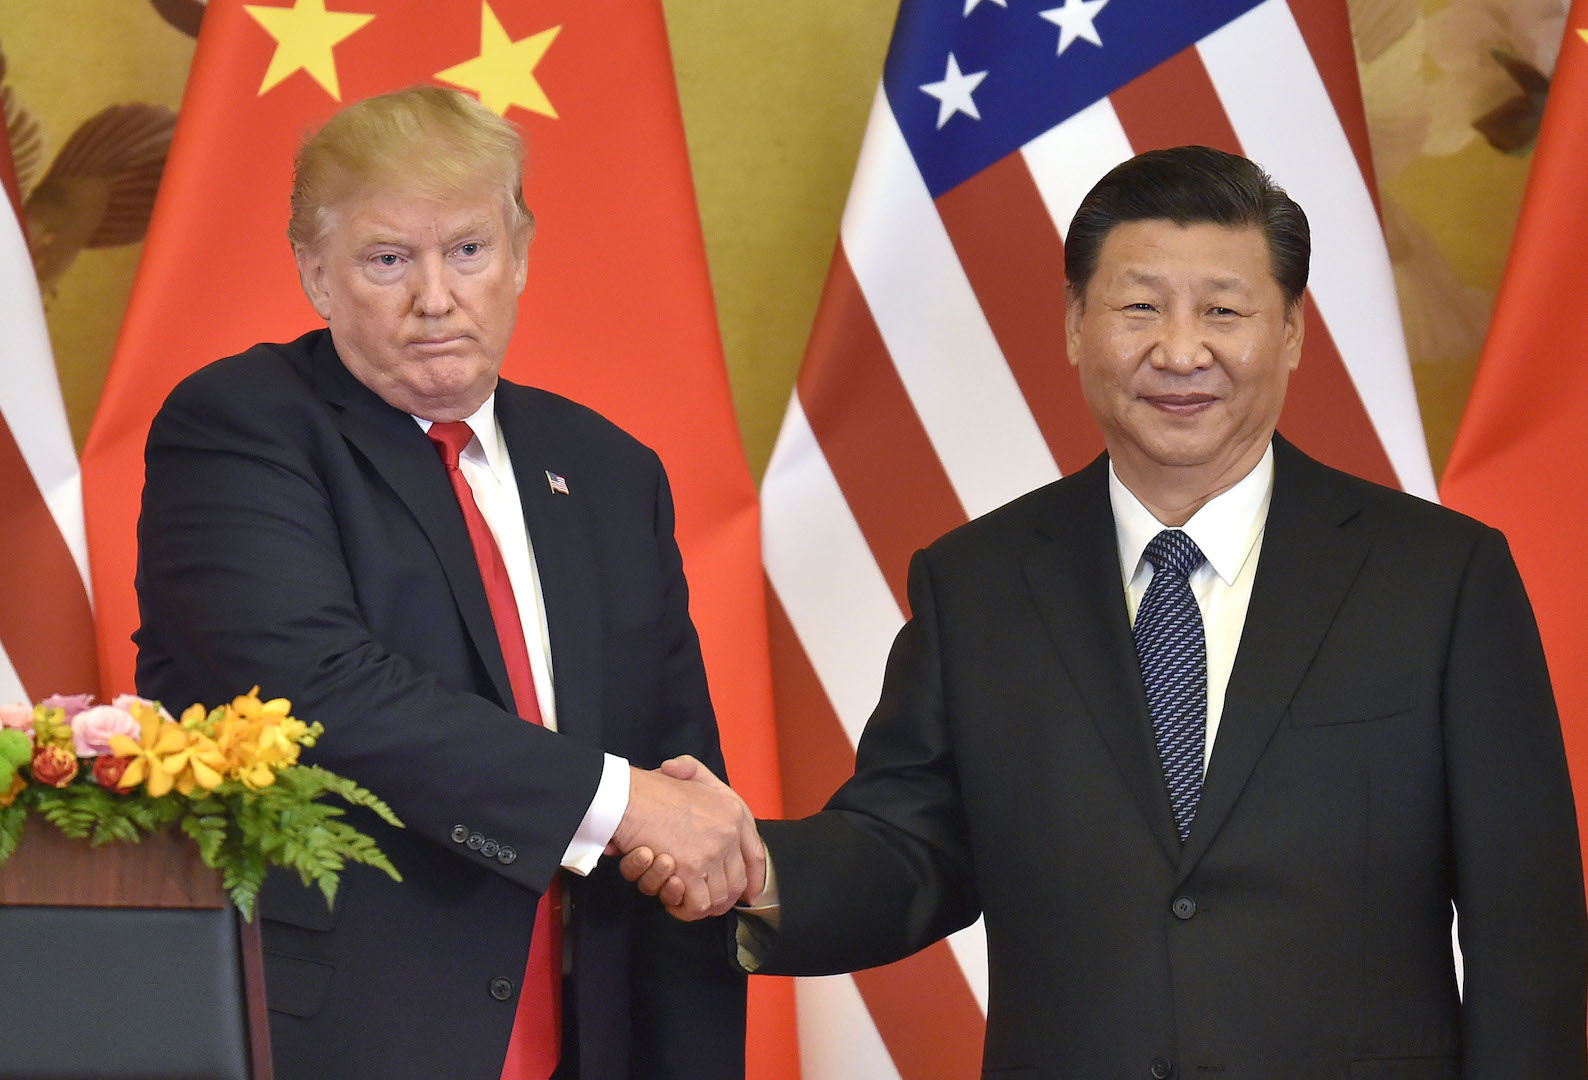 Guerra comercial China- EEUU marcó la agenda económica de Trump en el 2019